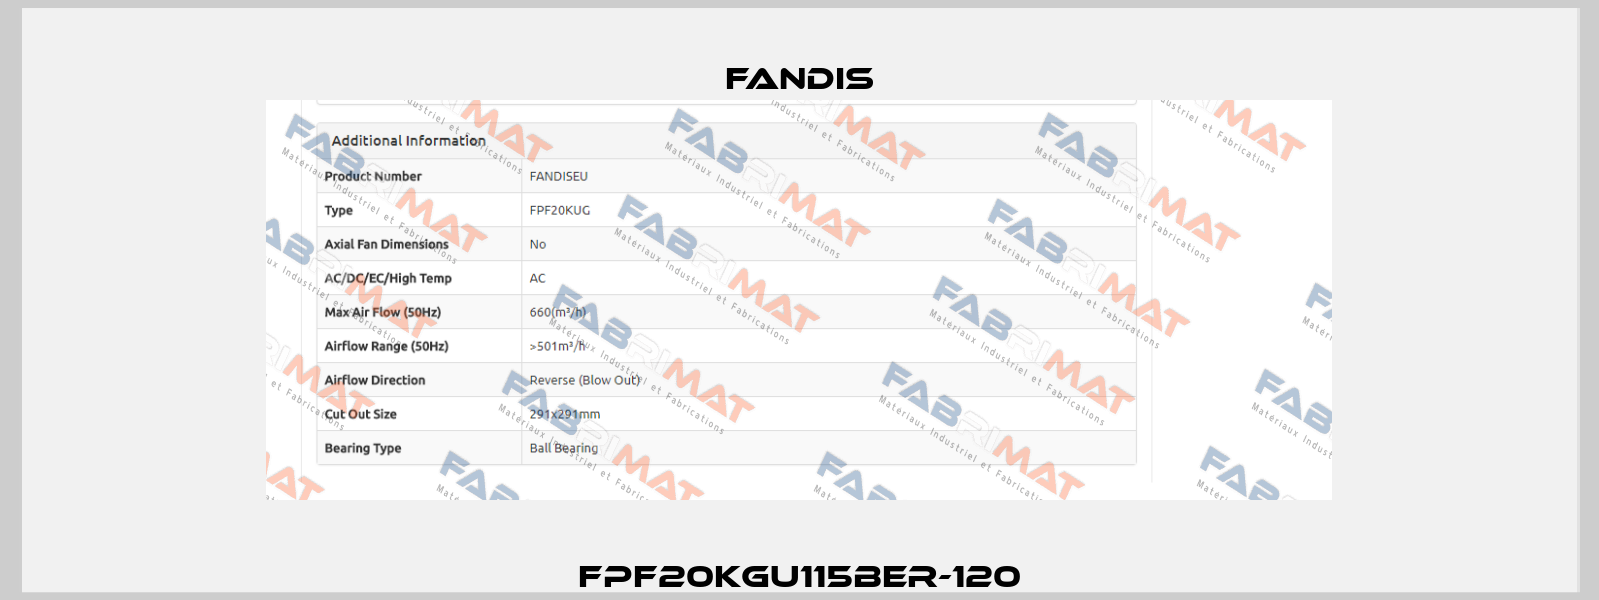 FPF20KGU115BER-120 Fandis